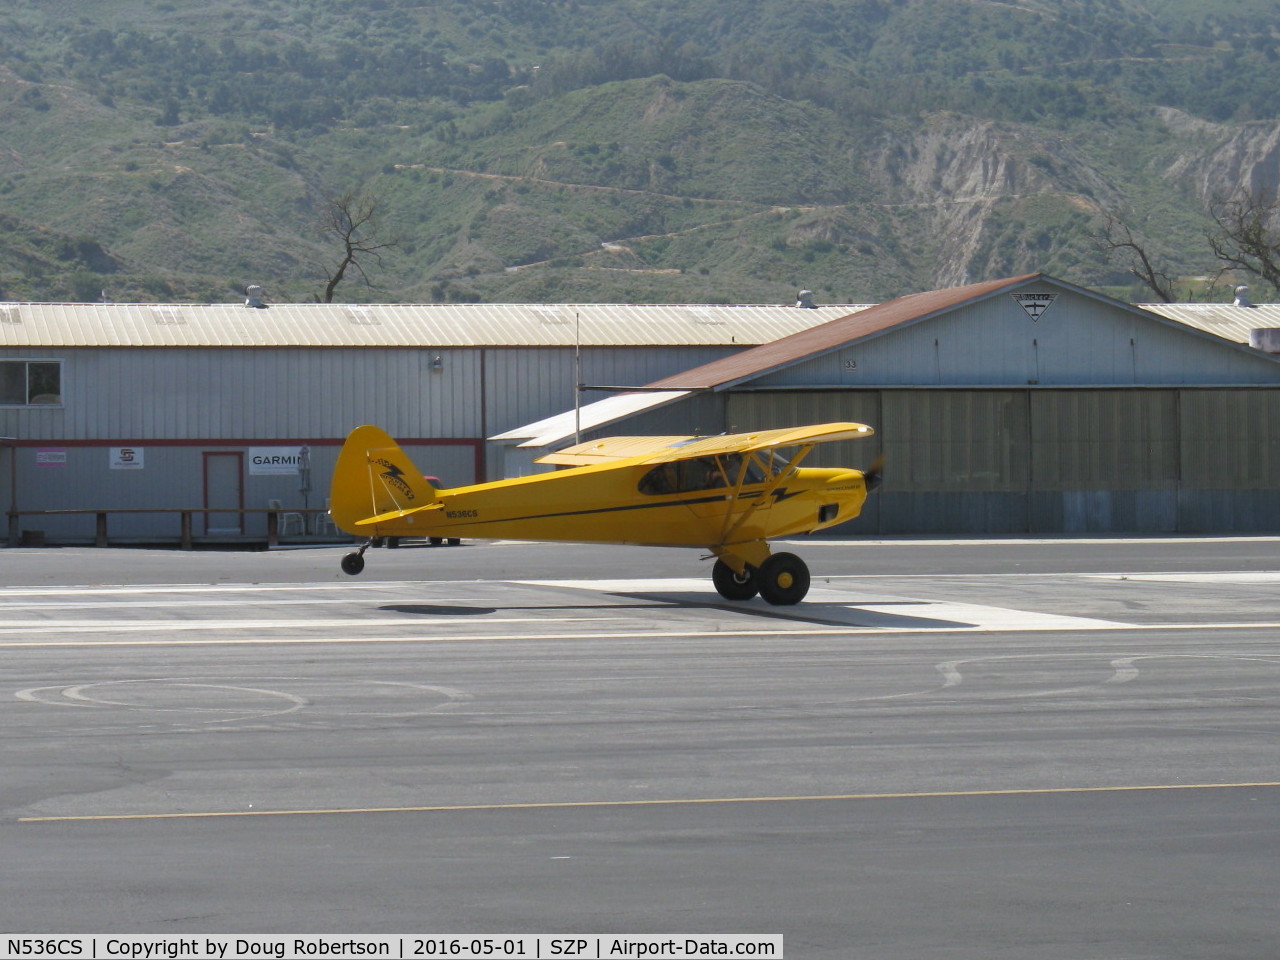 N536CS, 2007 Cub Crafters CC11-100 Sport Cub C/N CC11-00053, 2007 CubCrafters CC11-100 SPORT CUB, E-LSA, Continental O-200-A 100 Hp, this aircraft now California-based, takeoff roll Rwy 22